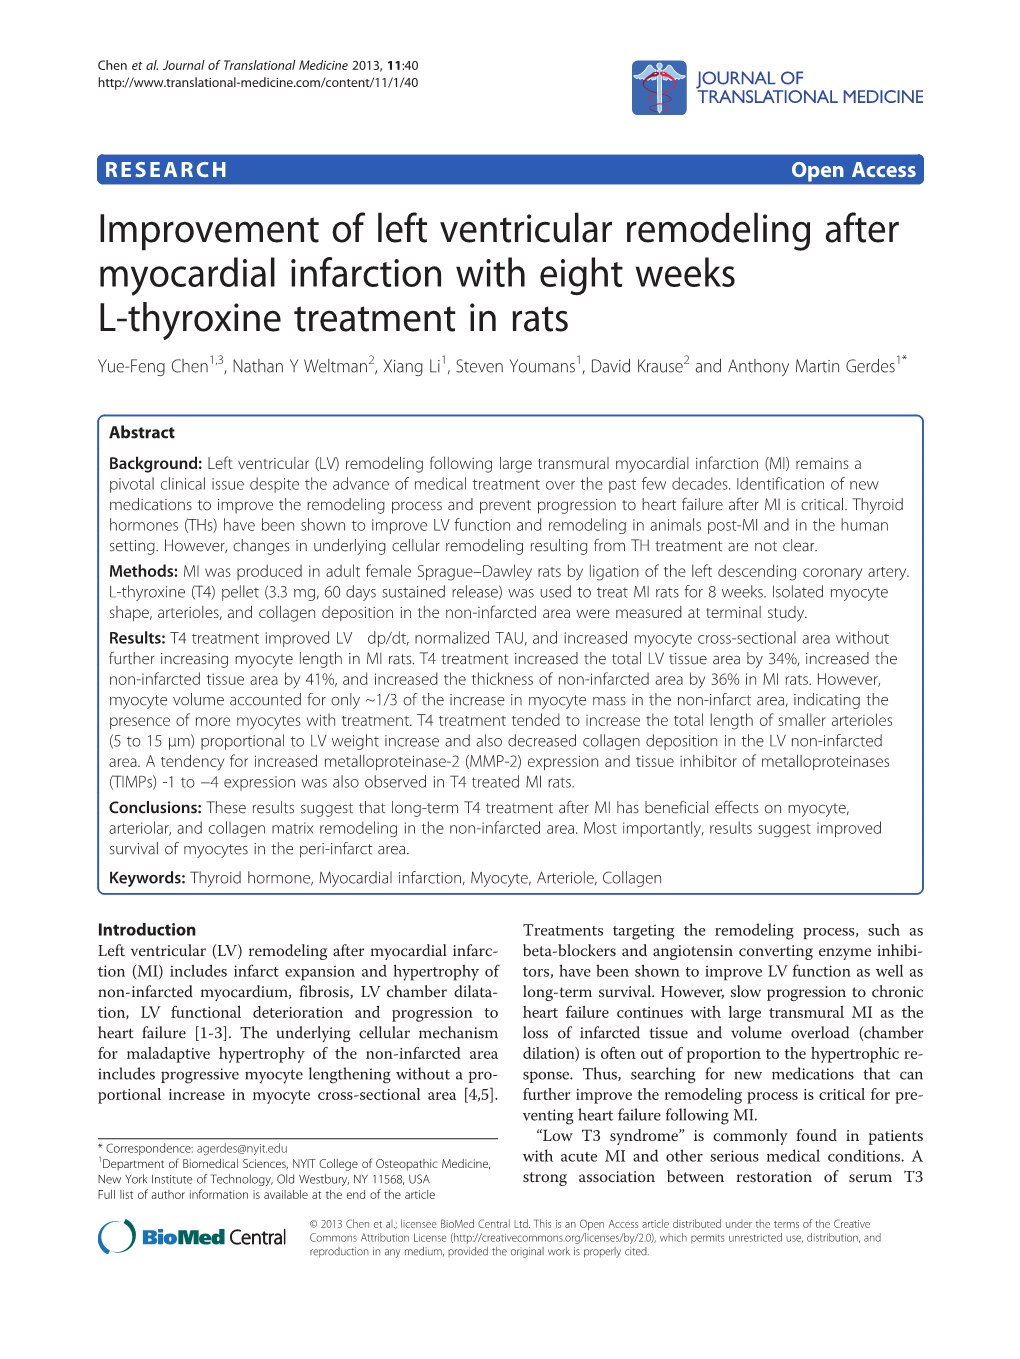 Improvement of Left Ventricular Remodeling After Myocardial